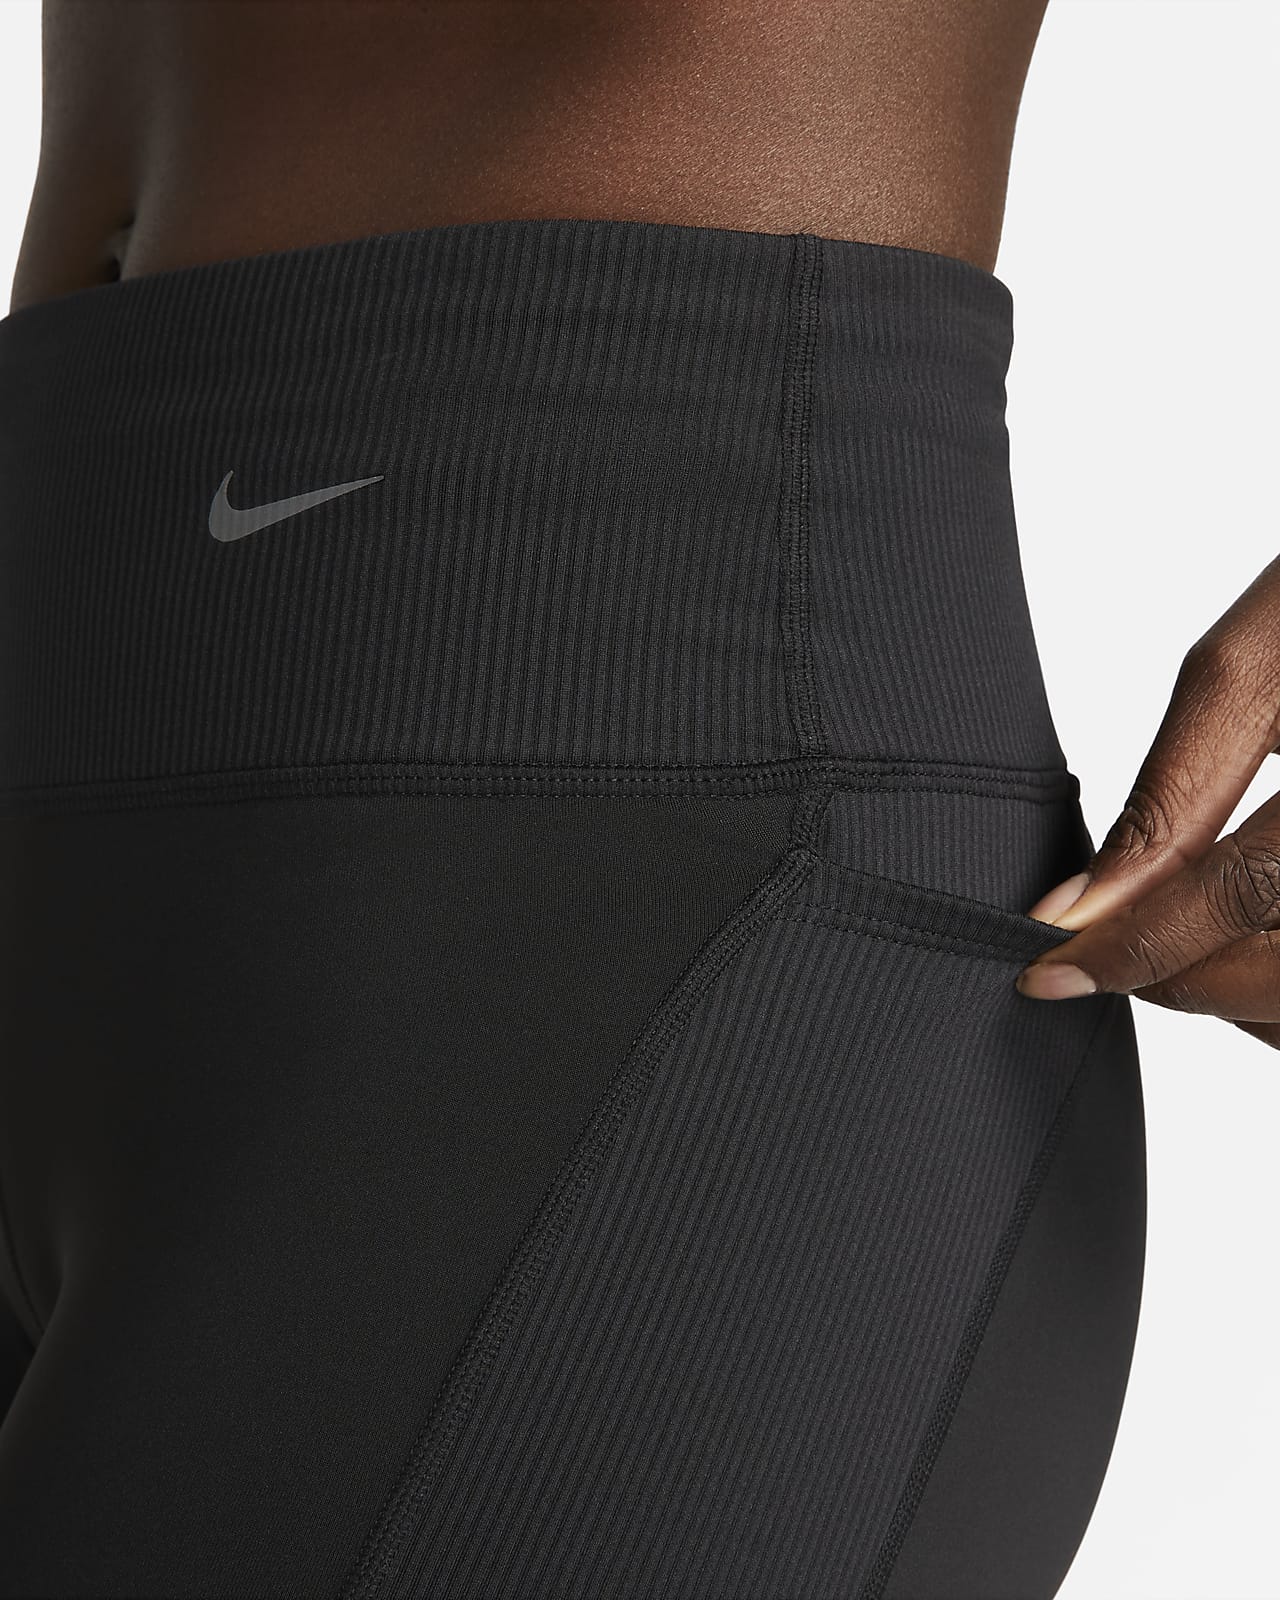 Women's Leggings Nike Dri-Fit Pocket Running With Mesh Panel 🟠 #408 🟠